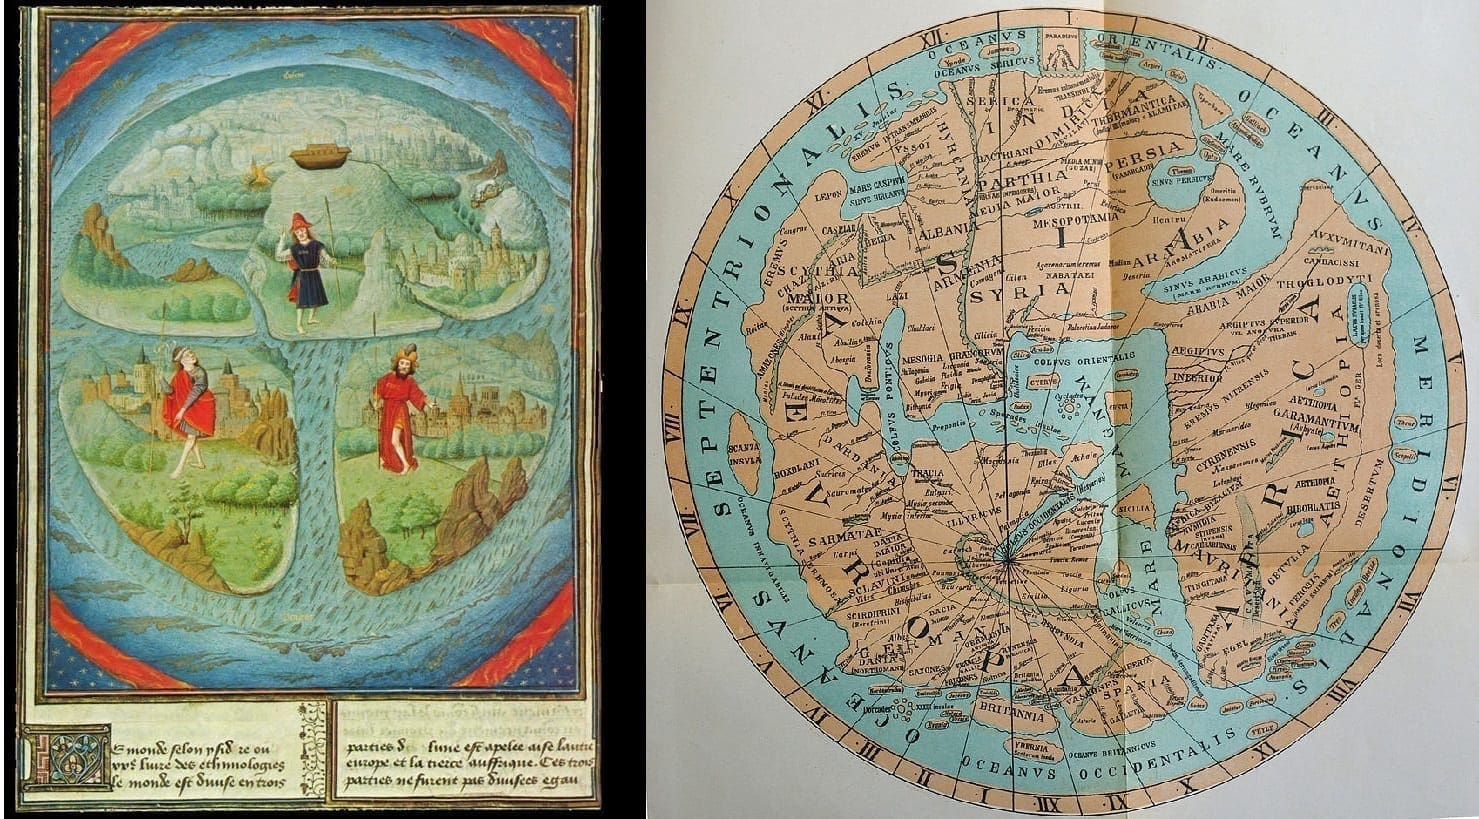 Two medieval Mappa Mundi depictions